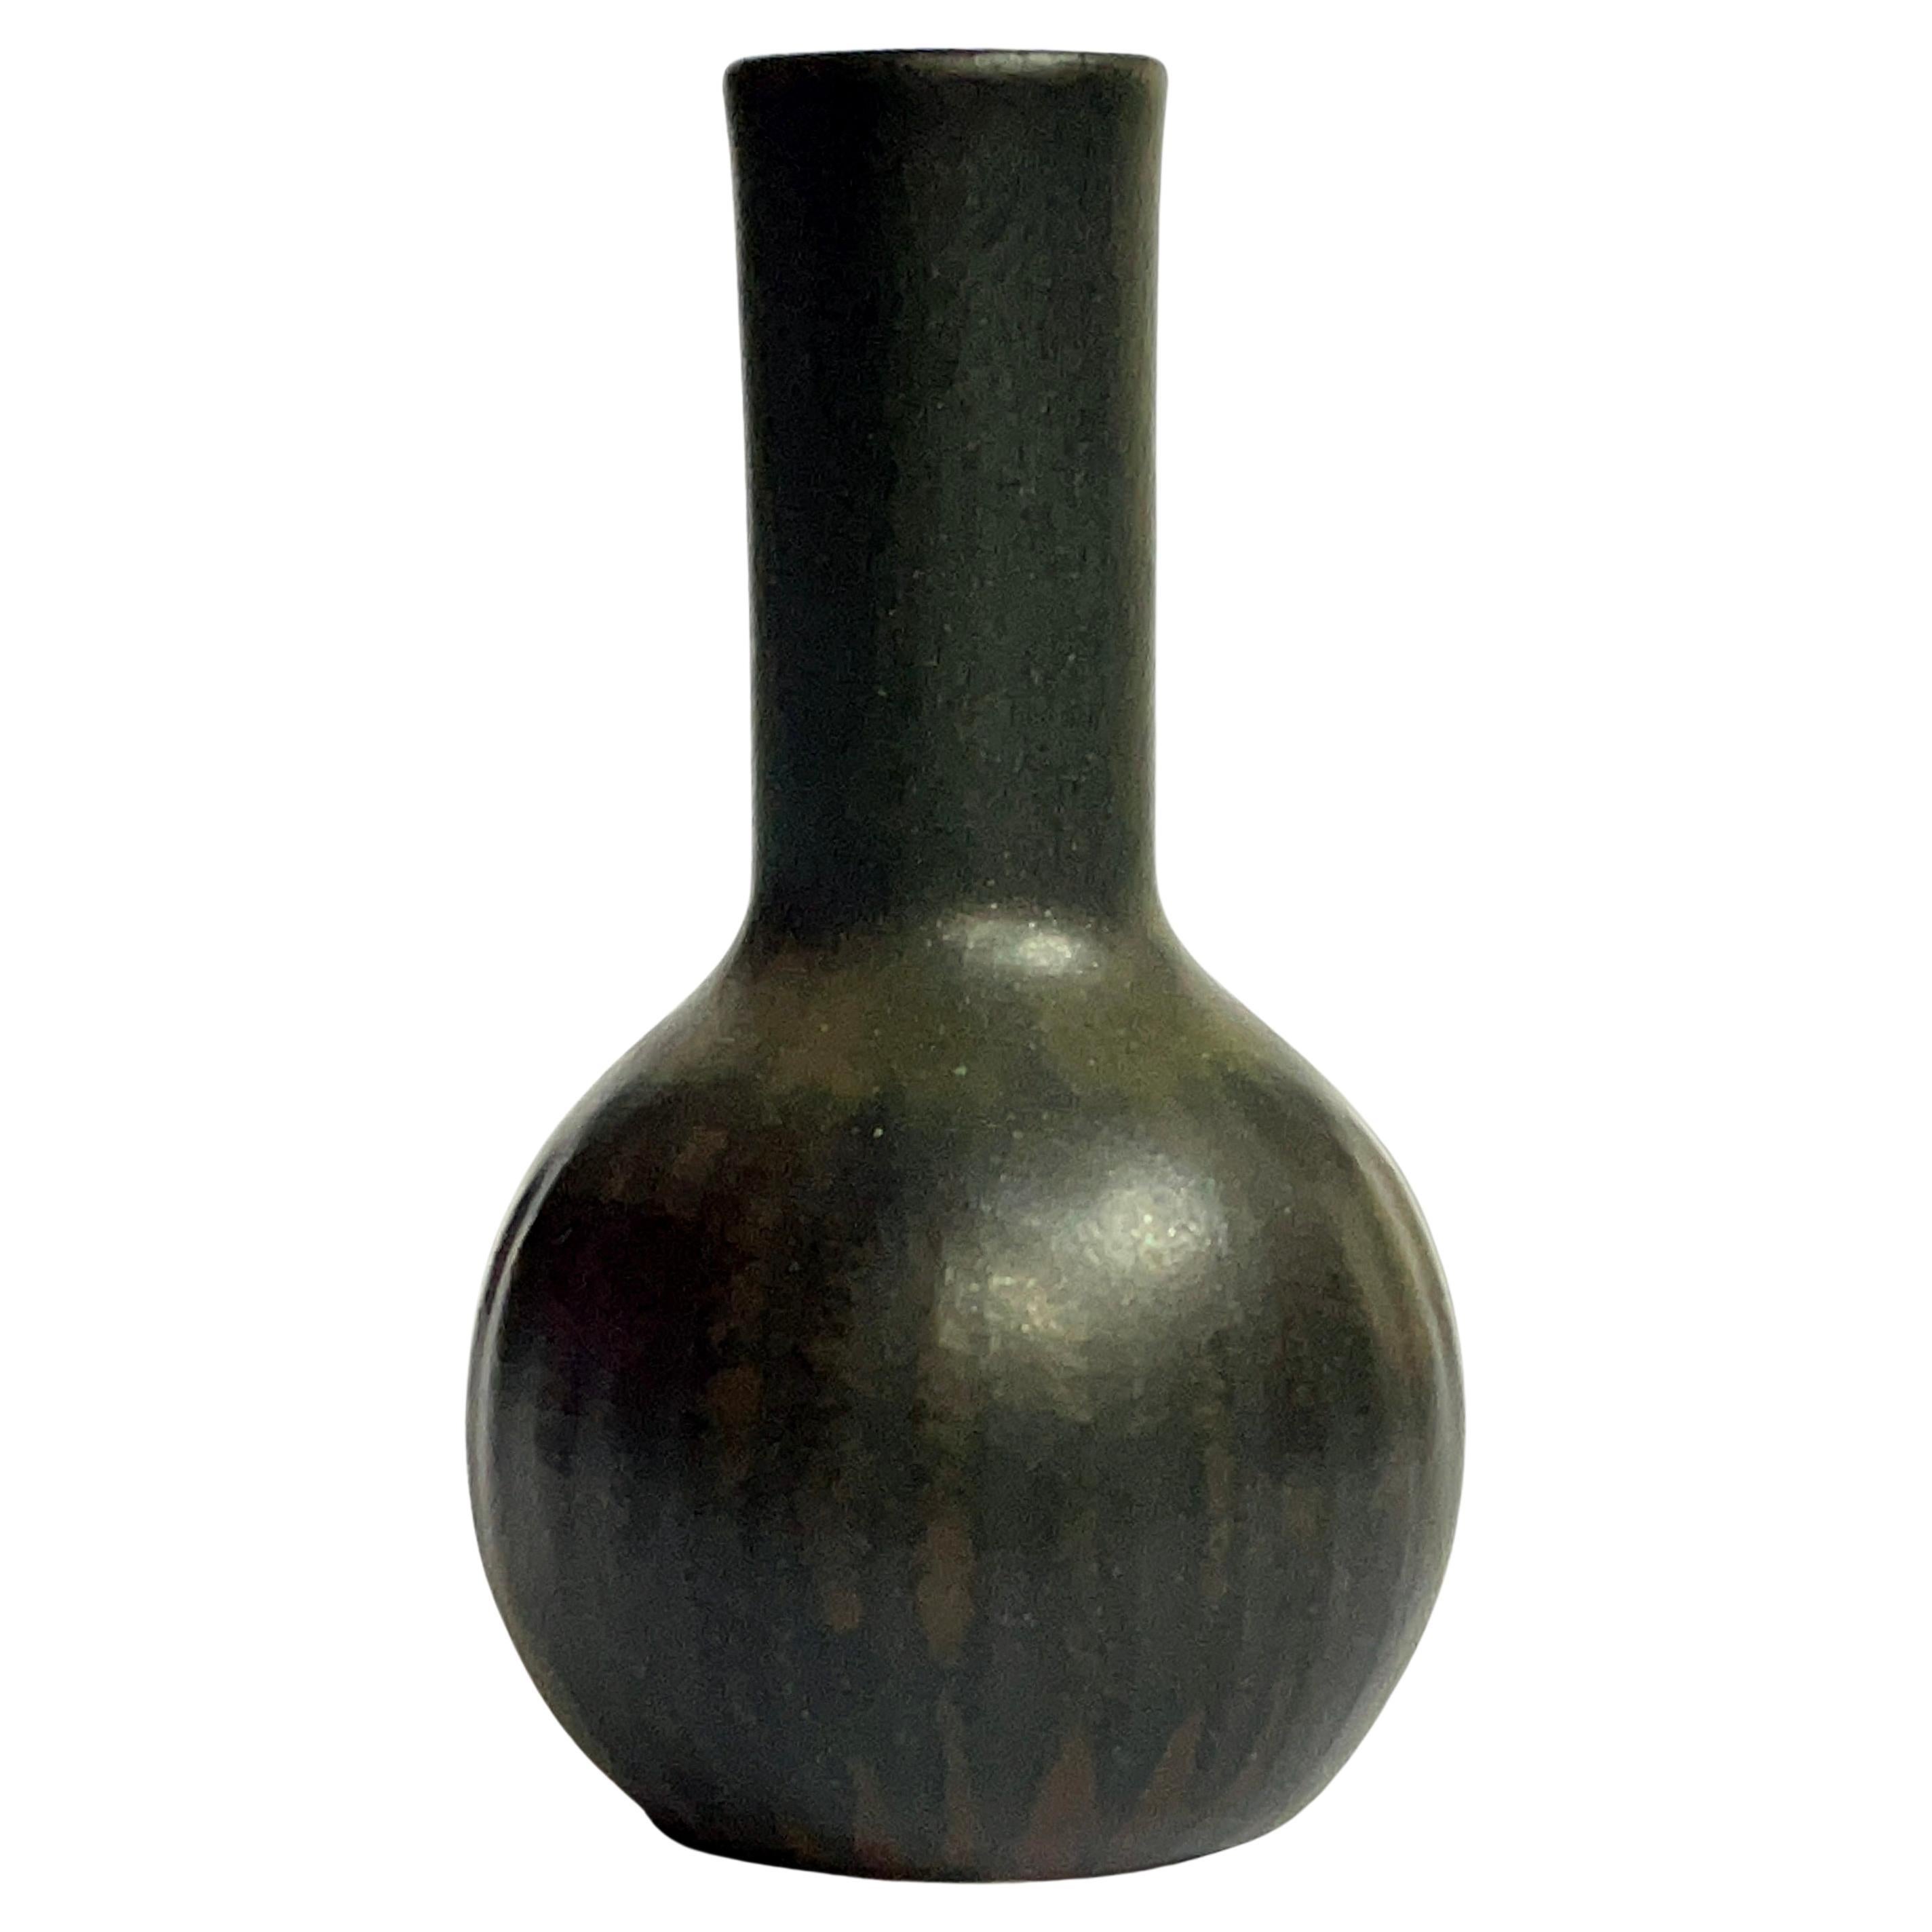 Carl-Harry Stålhane, Rörstrand Miniature Stoneware Vase, 1950s